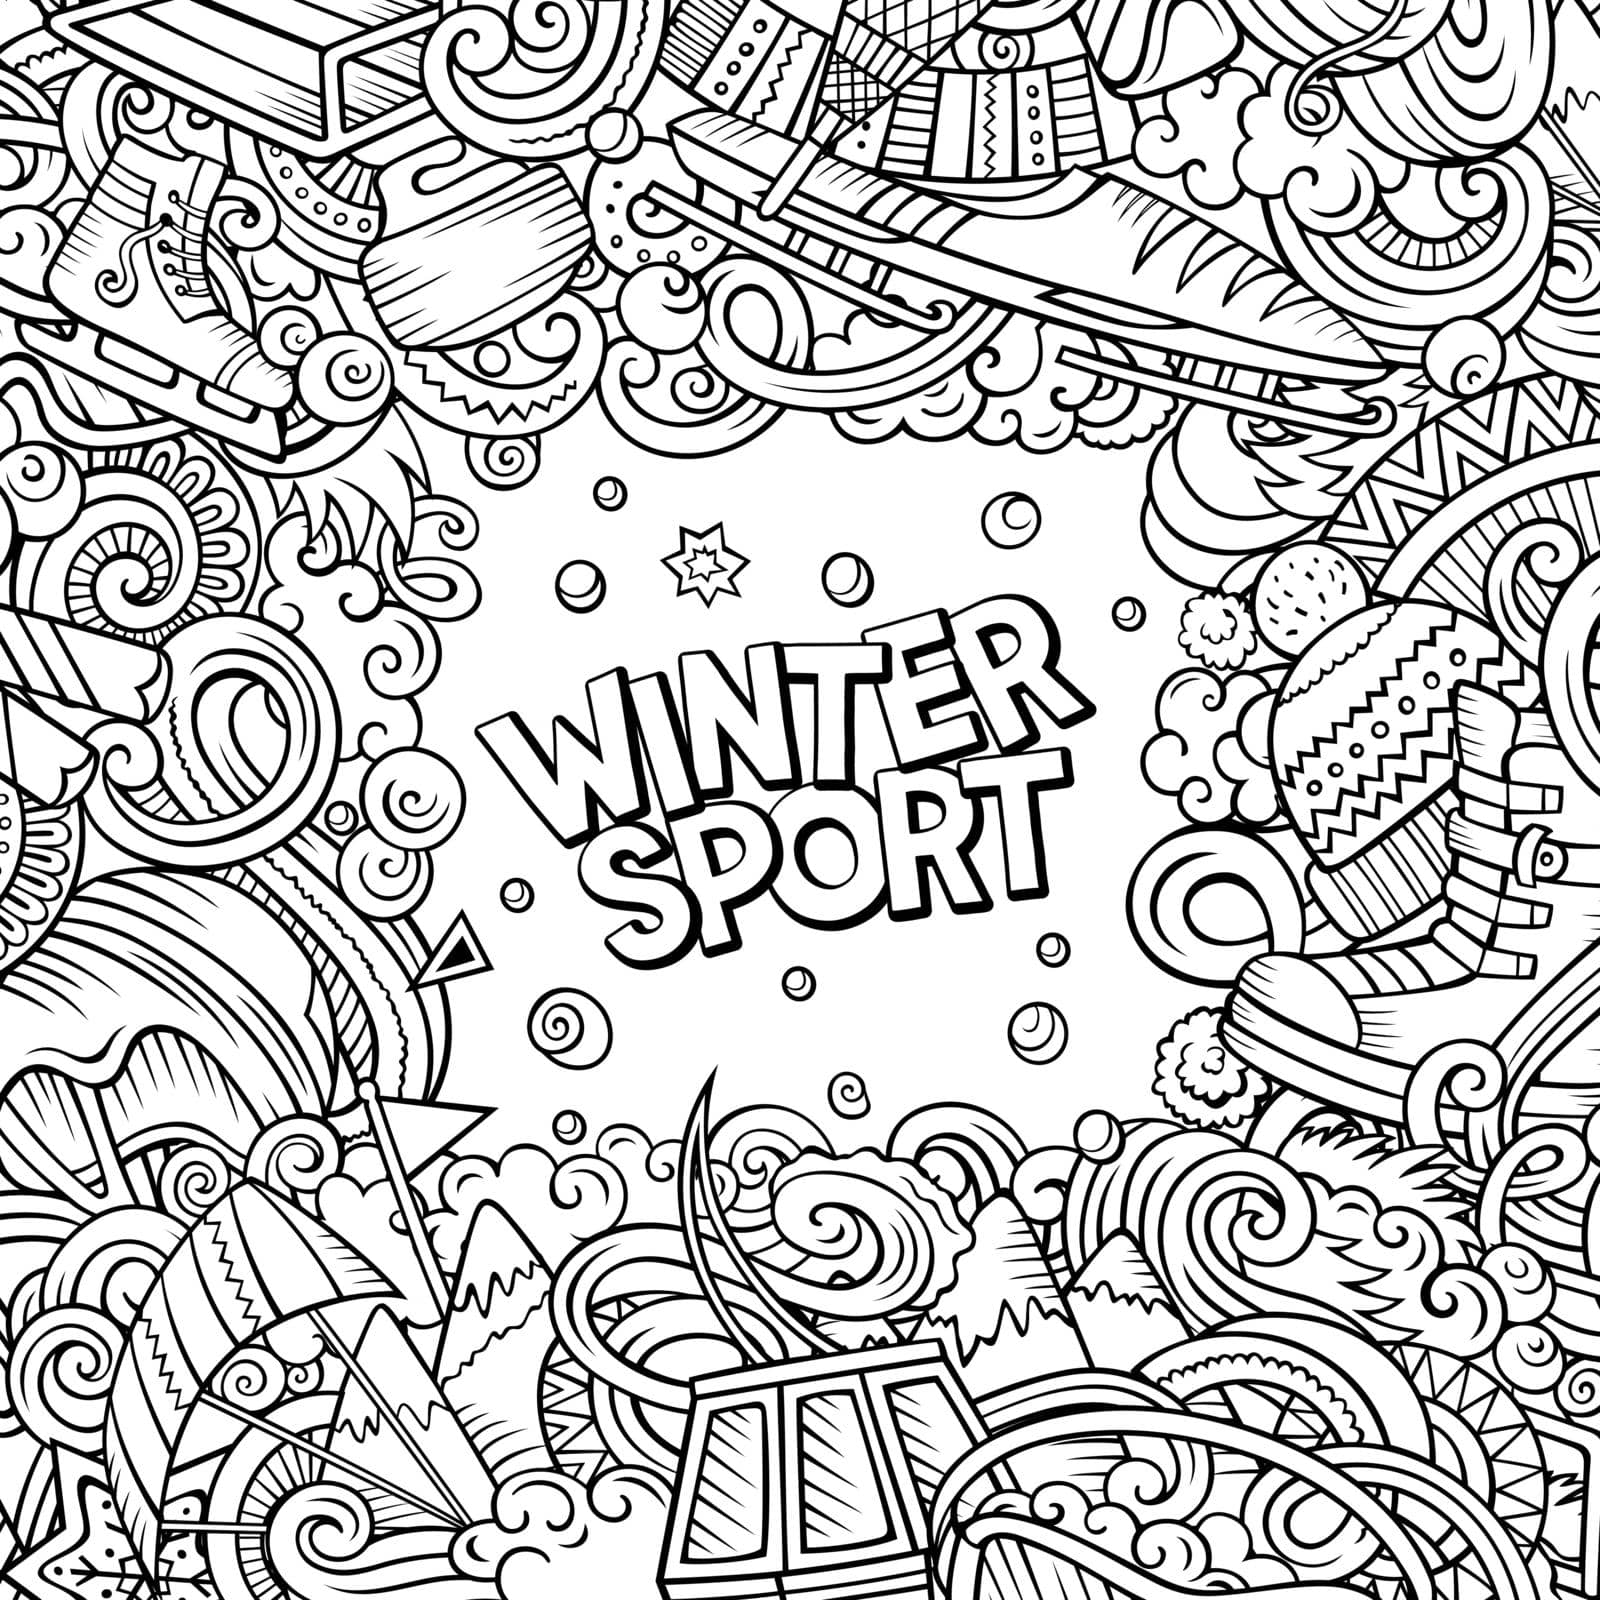 Winter sports hand drawn vector doodles illustration. Ski resort design. by balabolka